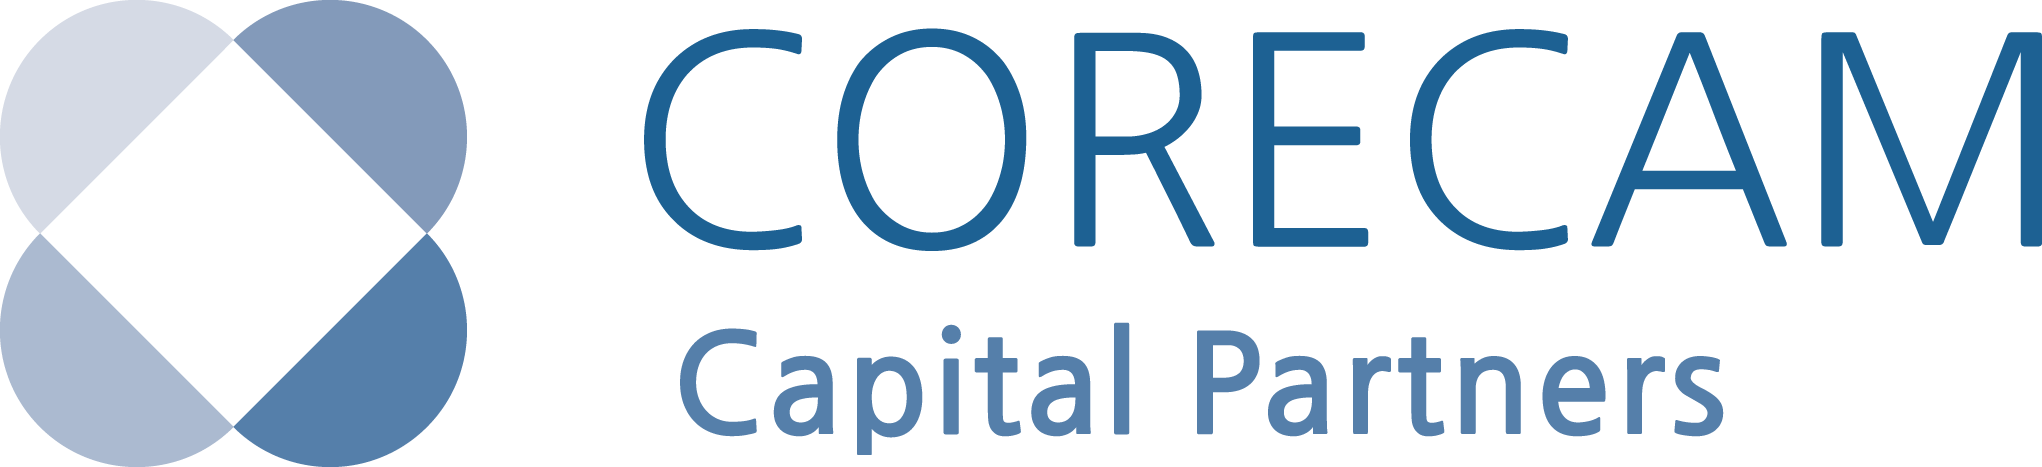 Corecam Capital Partners